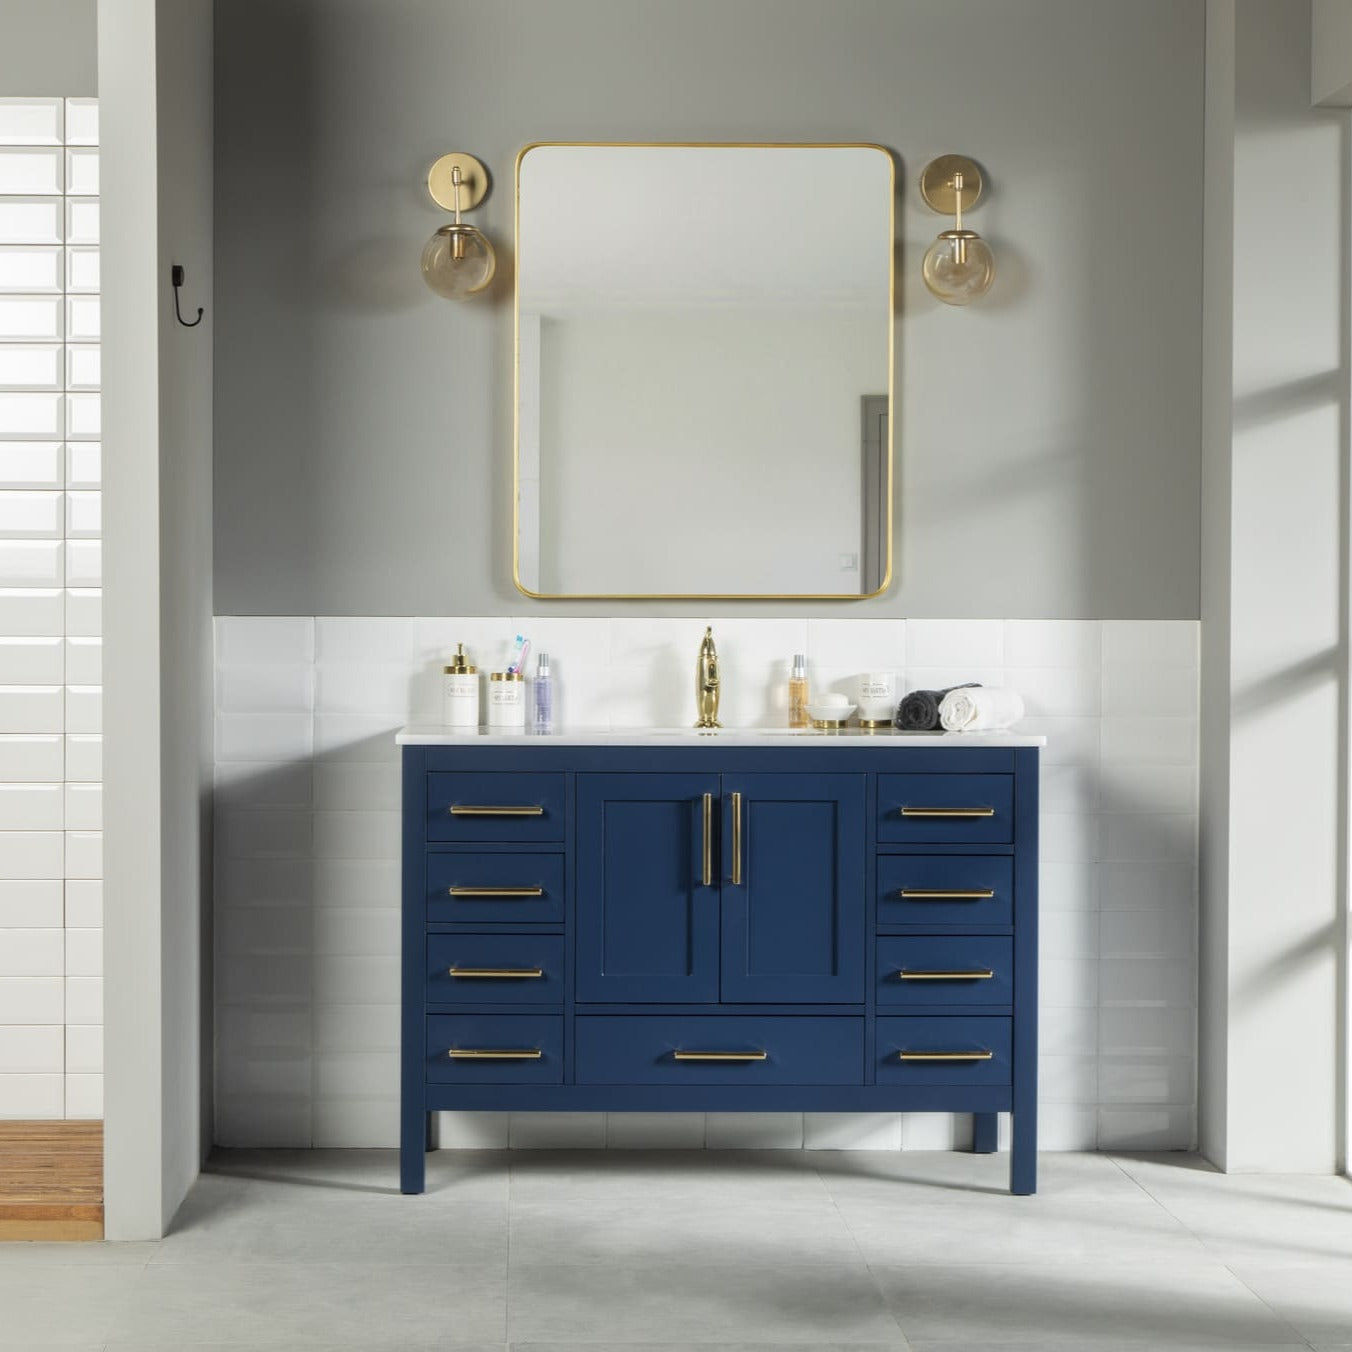 Ahley Bathroom Vanity Homelero 48"  #size_48"  #color_blue #hardware_brass